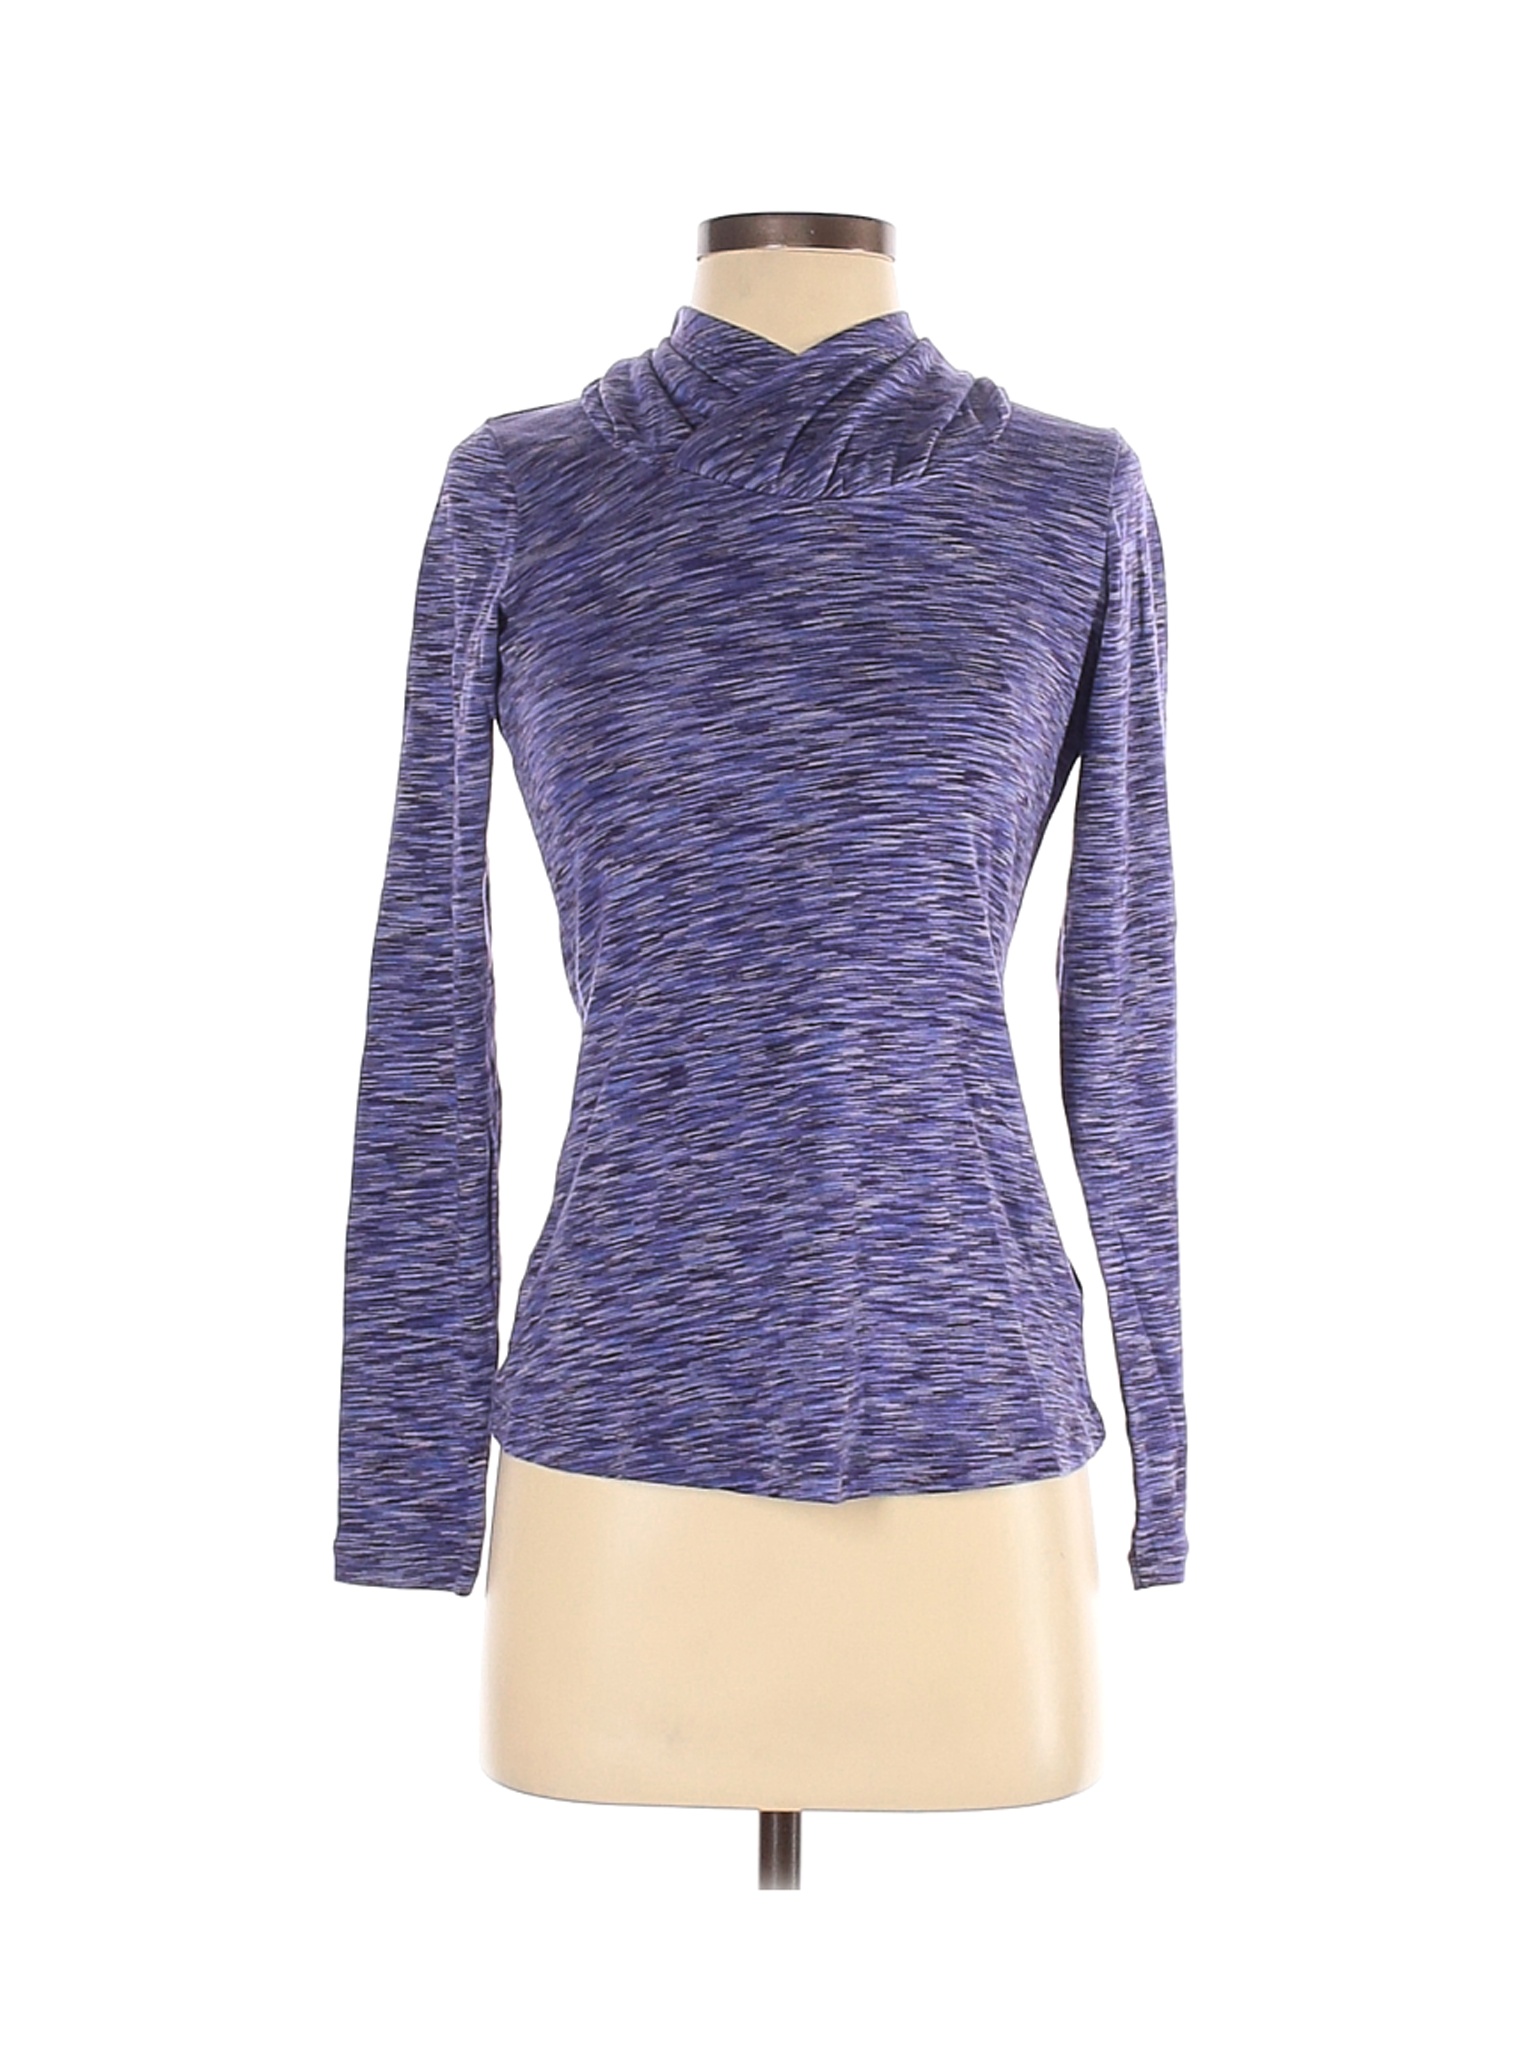 Columbia Women Purple Pullover Hoodie S | eBay